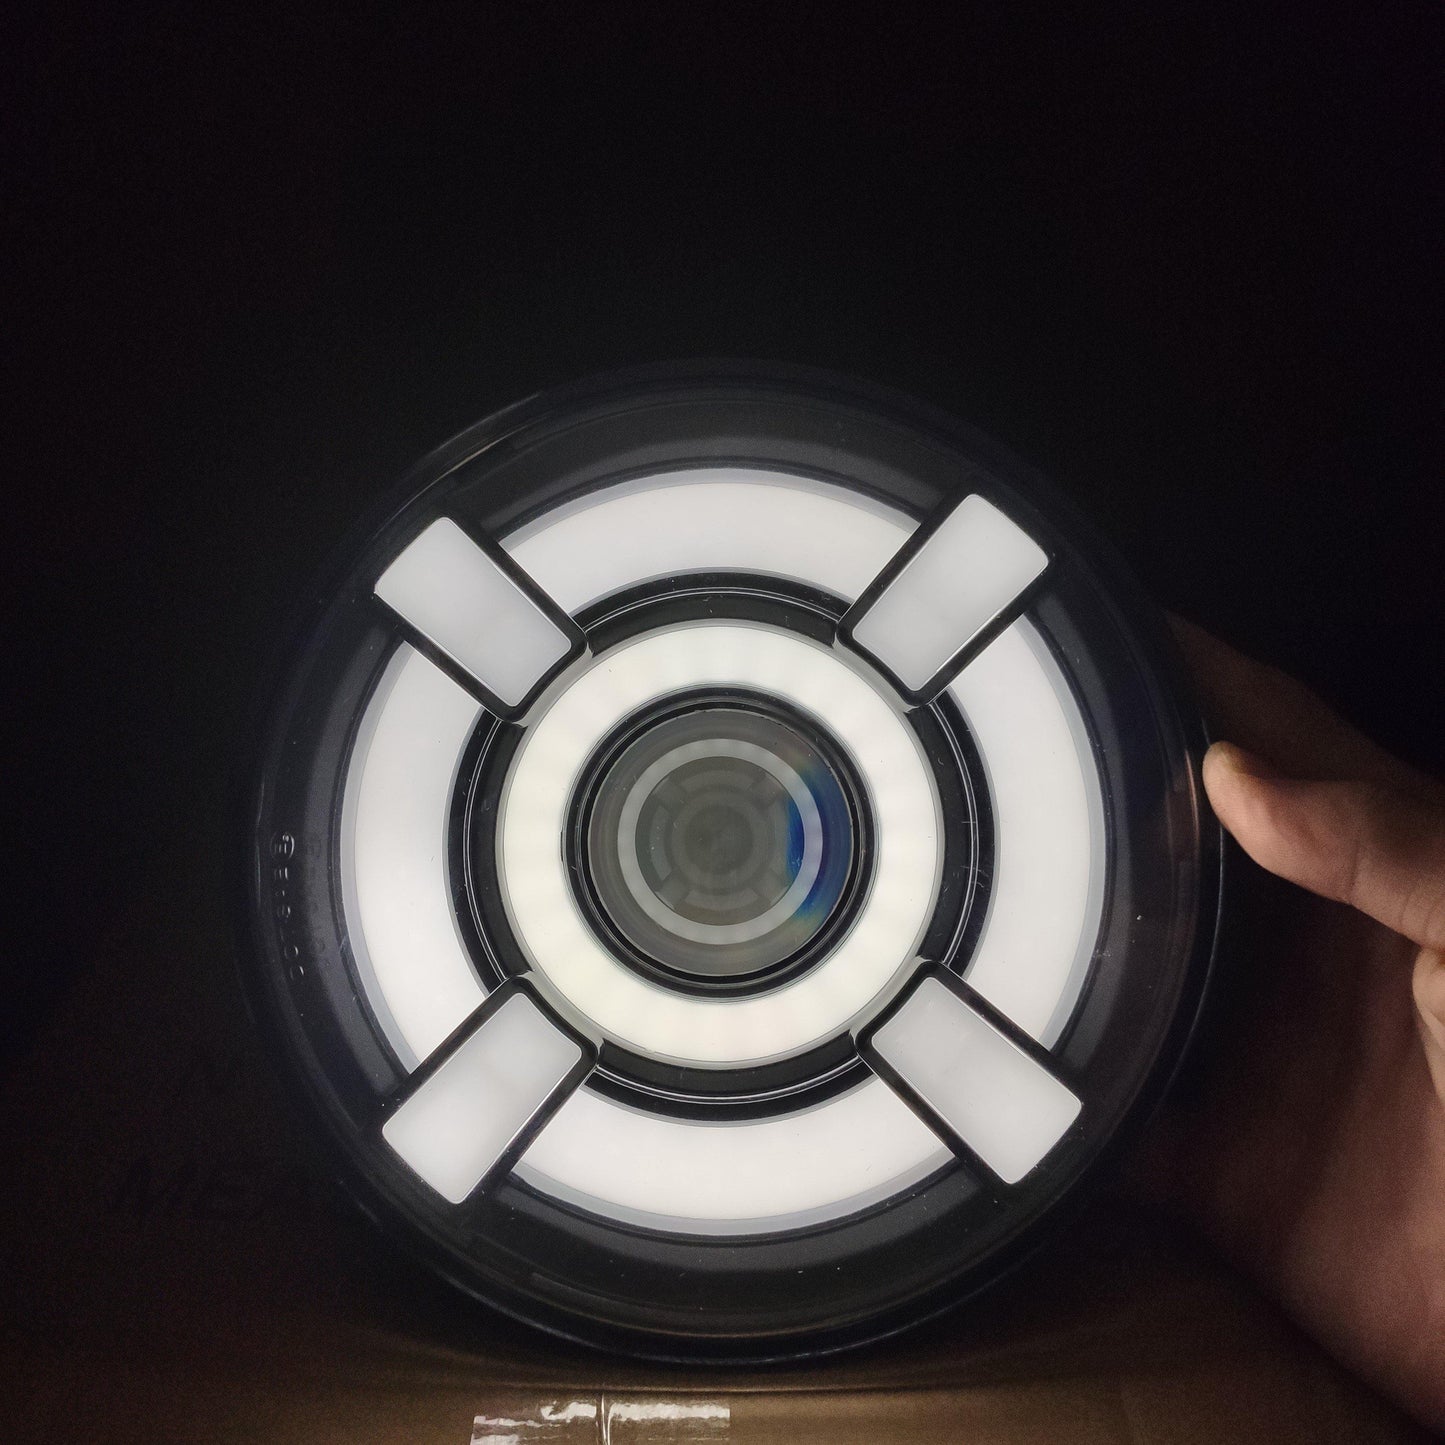 New X Design Headlight (6 months warranty) - Premium Headlights from Sparewick - Just Rs. 2500! Shop now at Sparewick